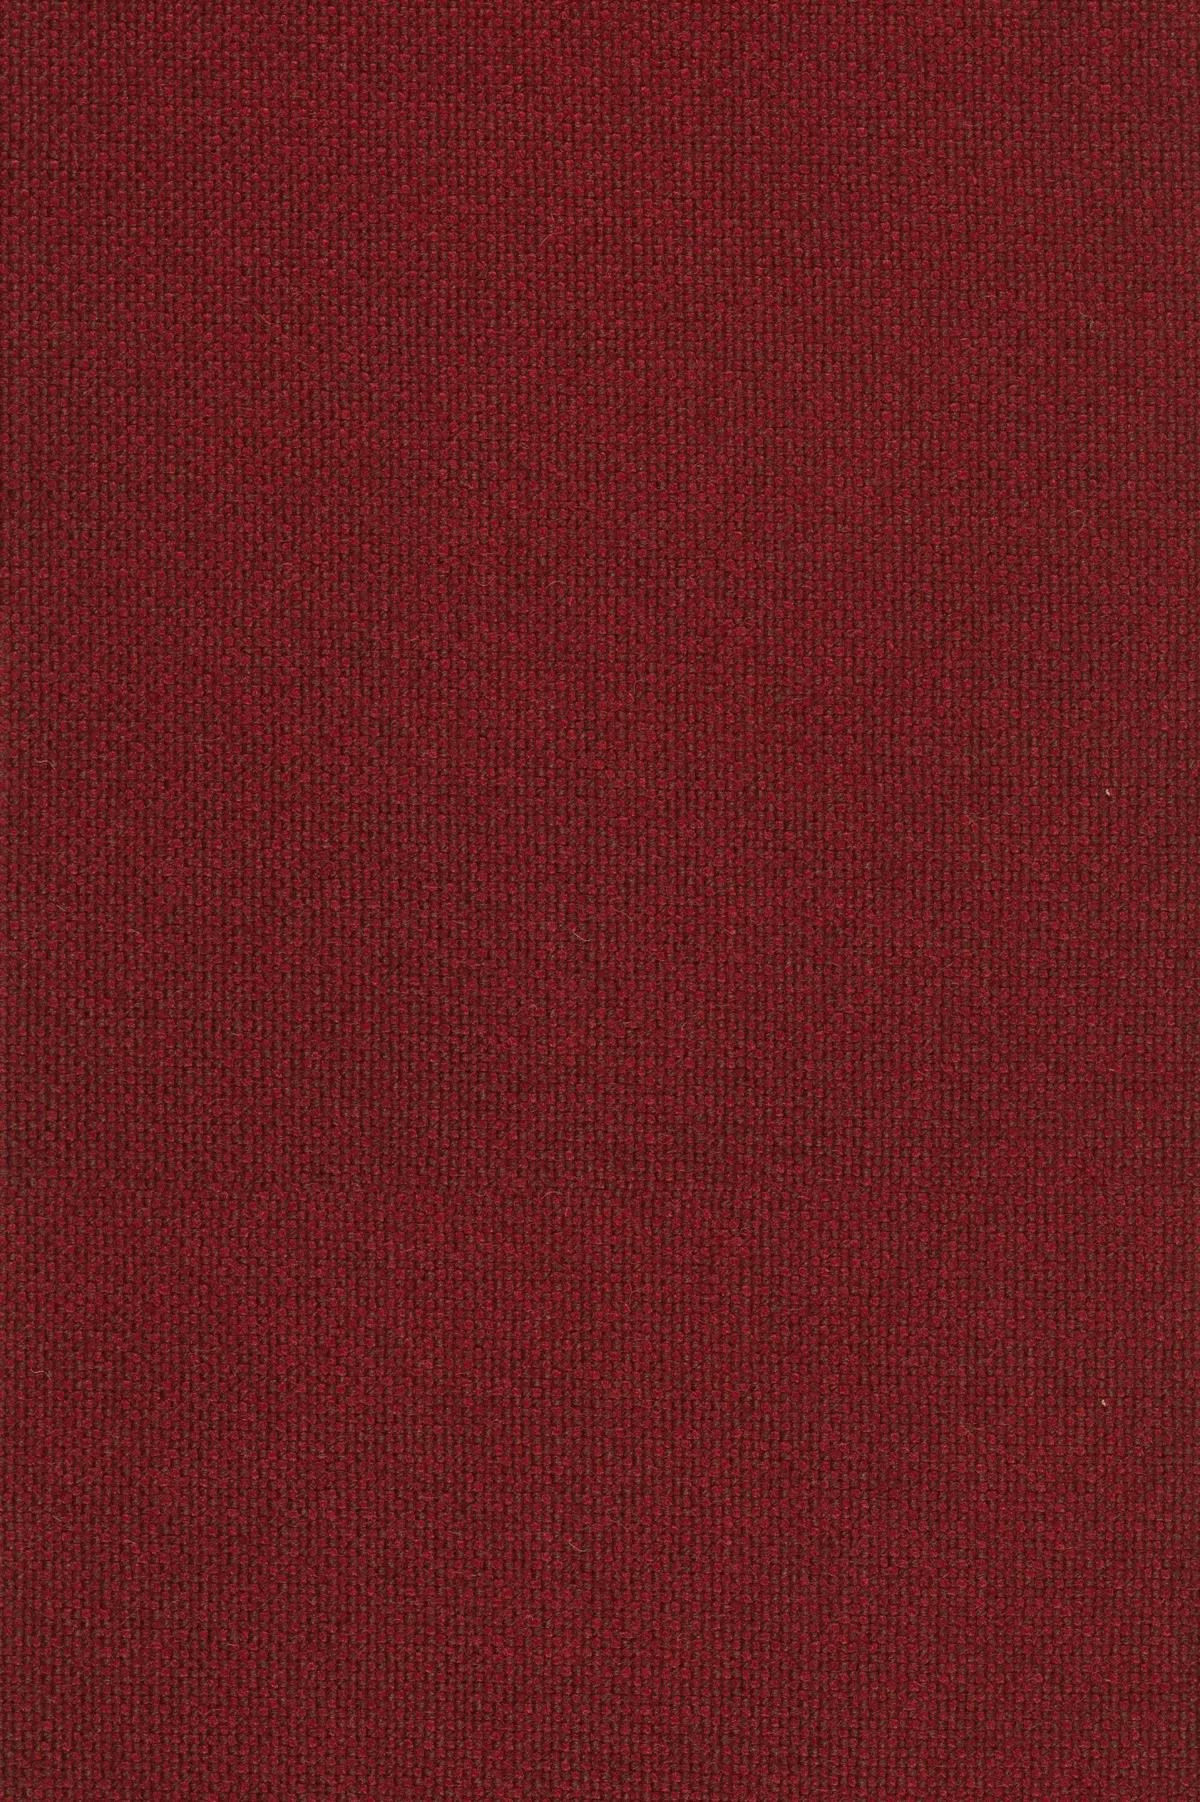 Fabric sample Hallingdal 65 687 red